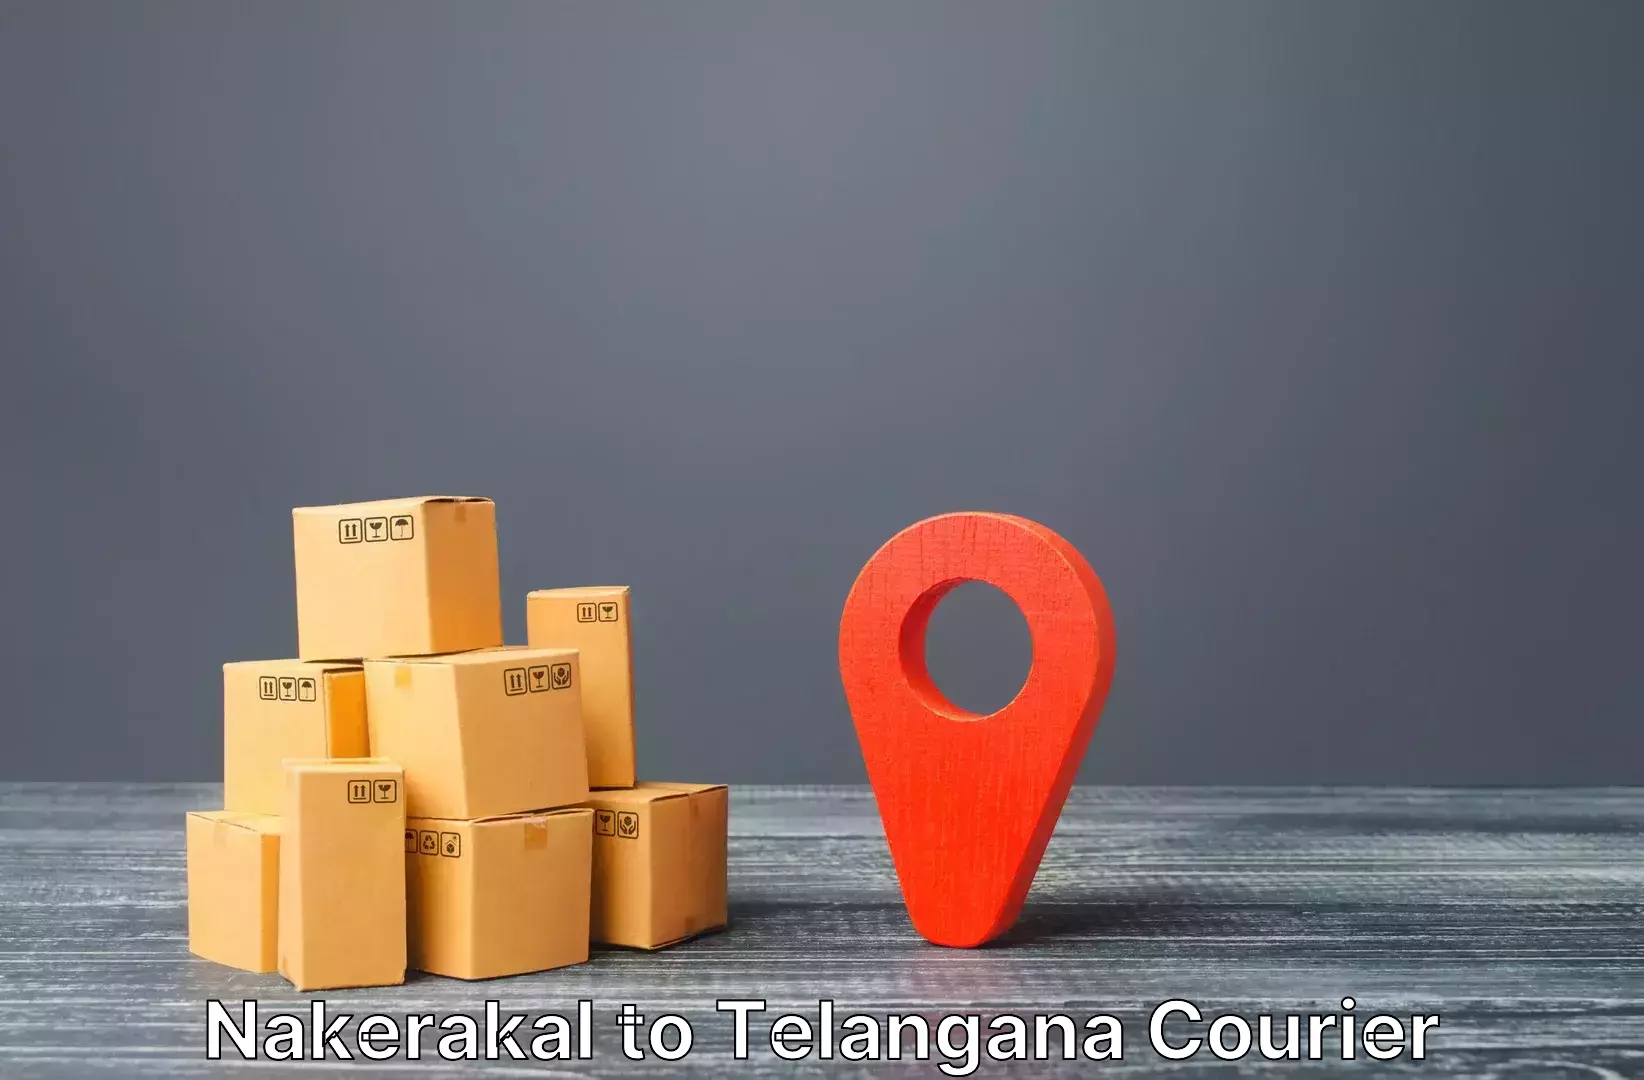 Online luggage shipping booking Nakerakal to Pathipaka